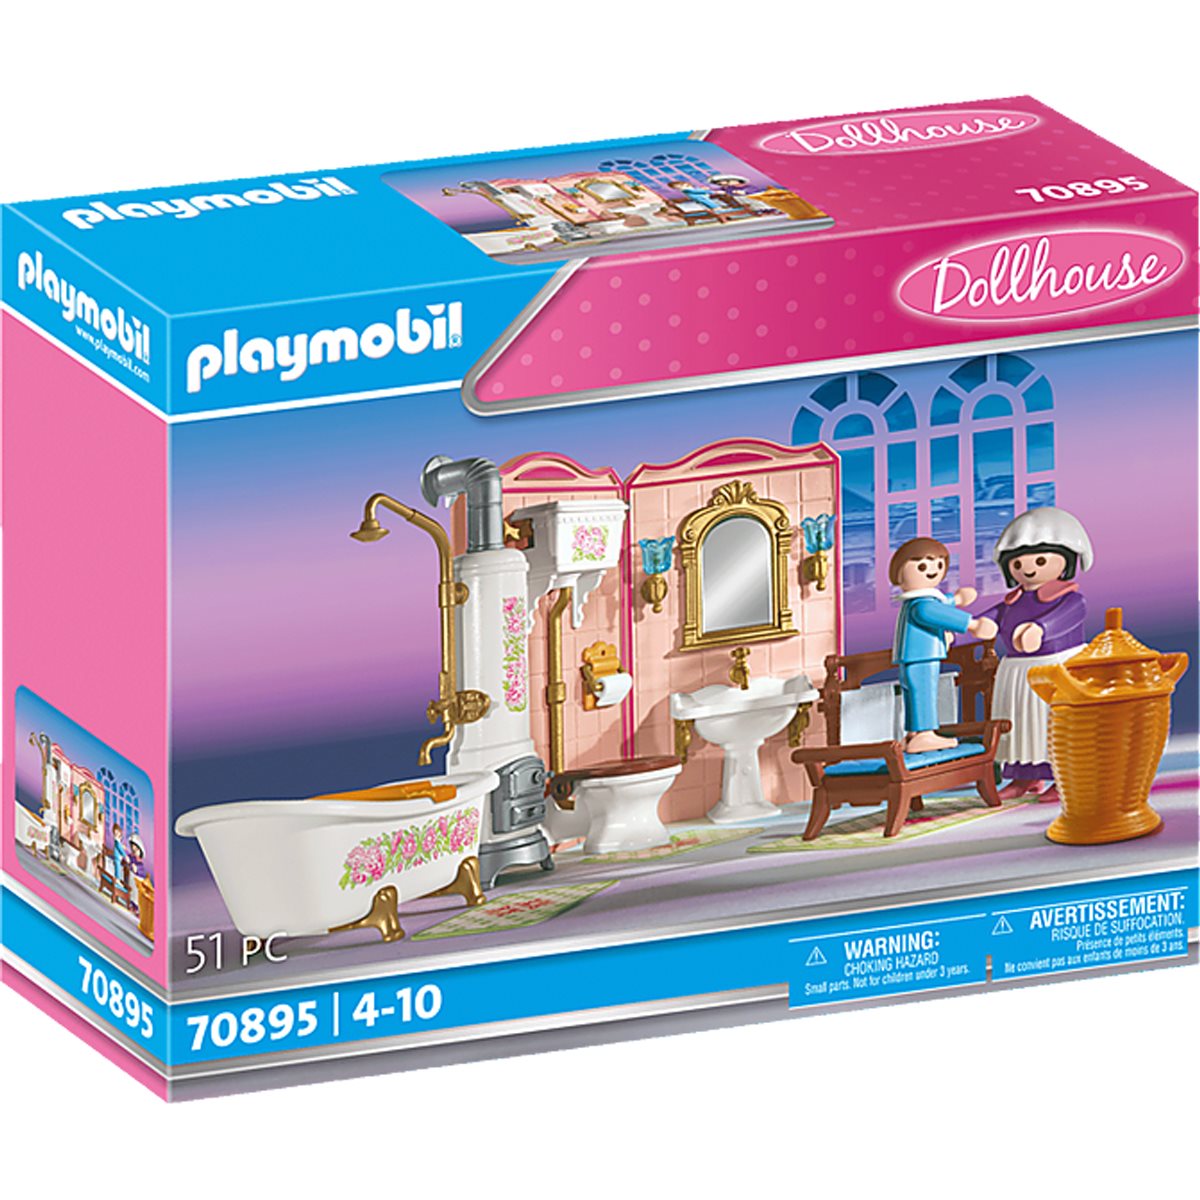 Playmobil Christmas Dollhouses & Play Sets